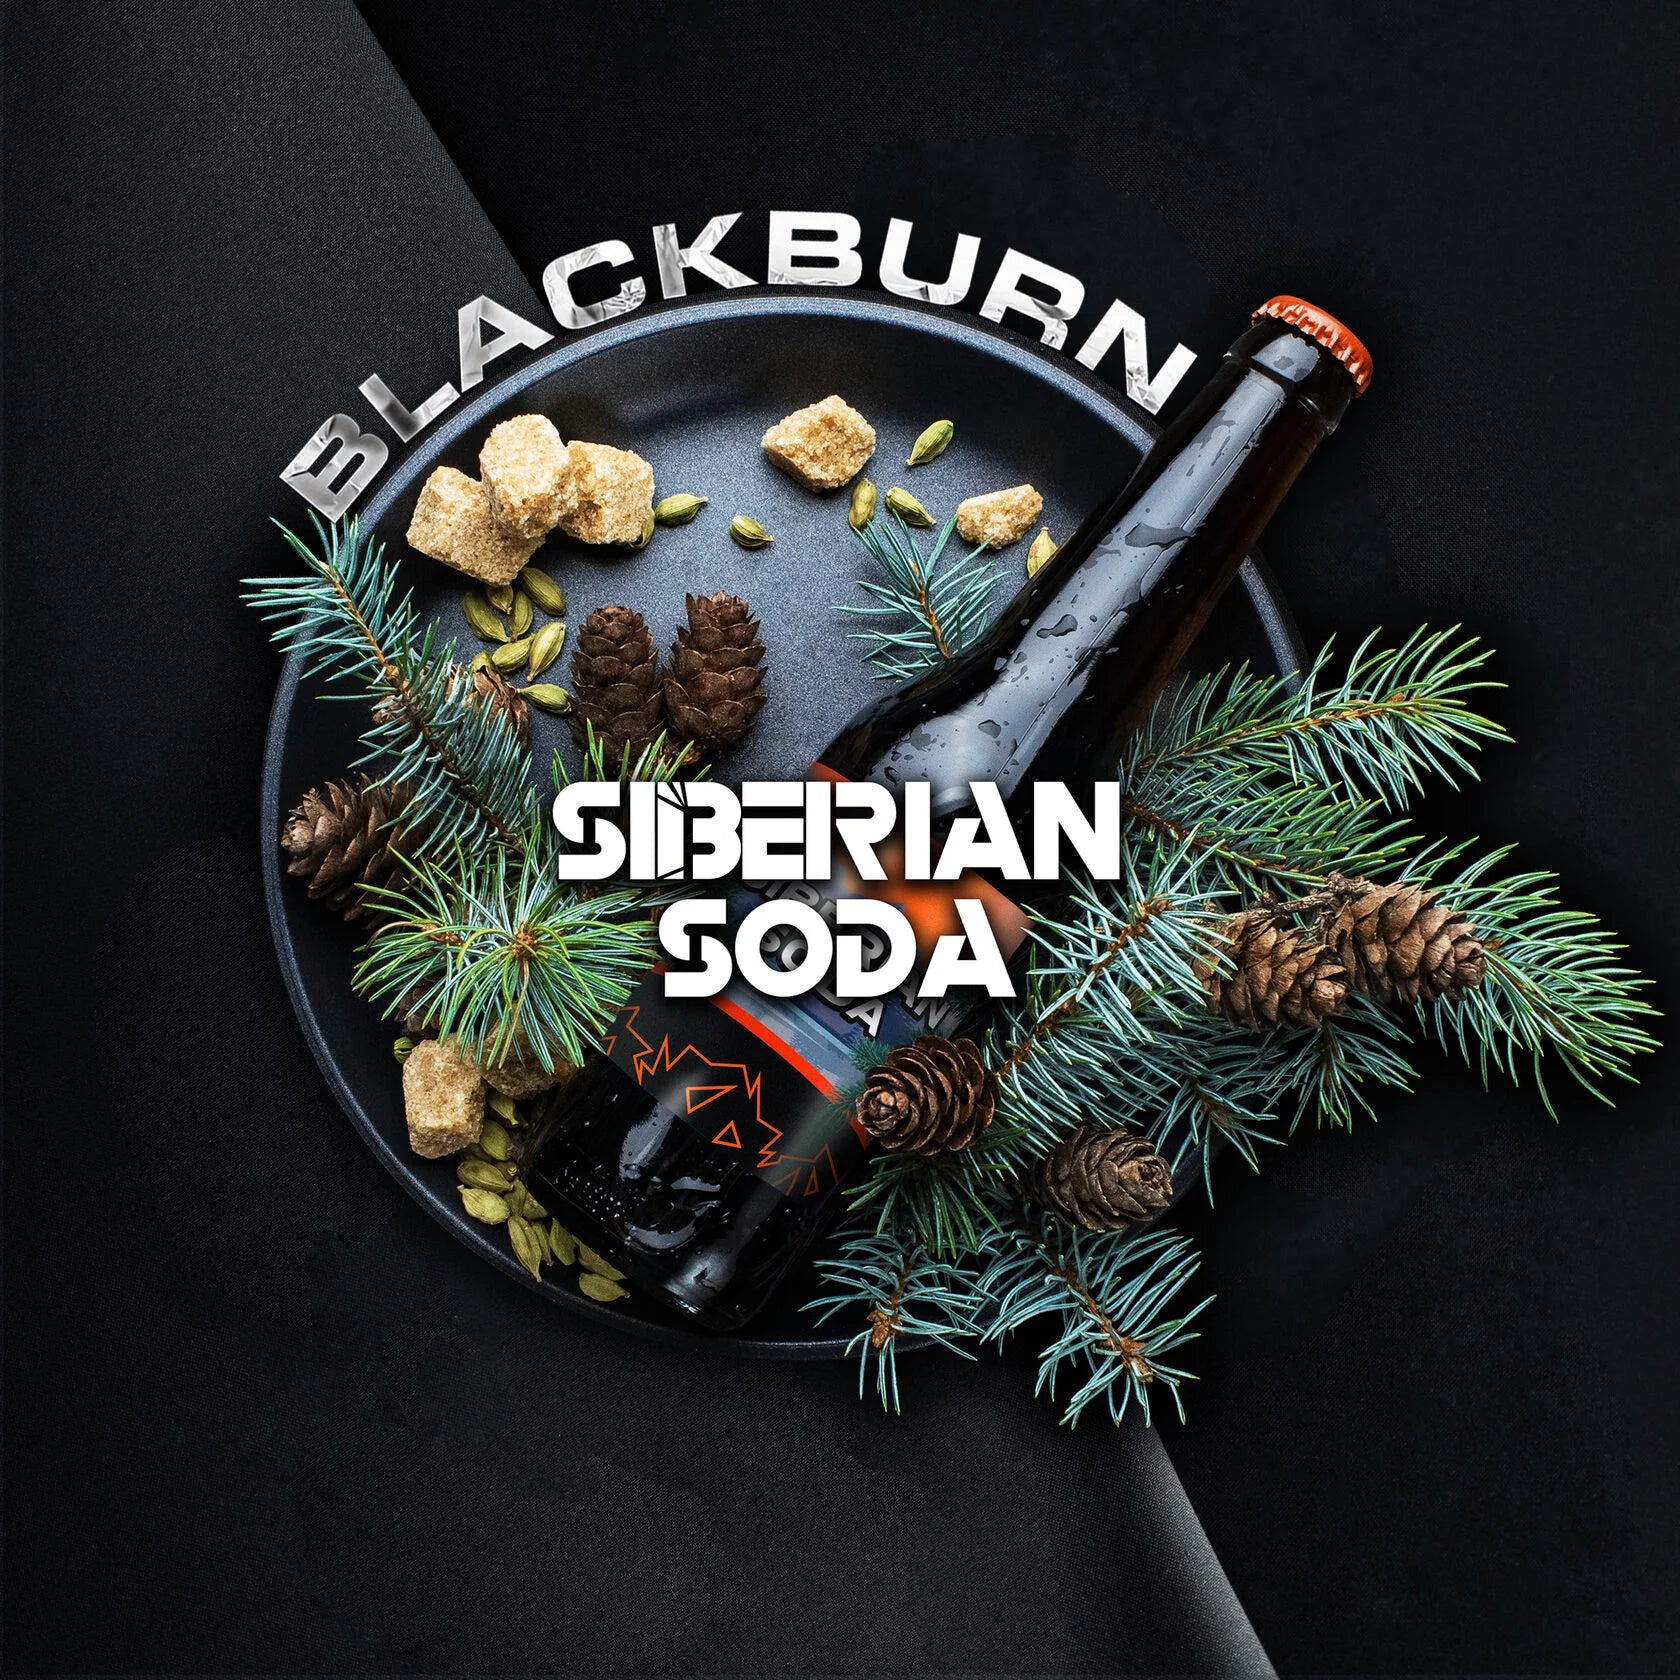 Blackburn Siberian Soda Tobacco